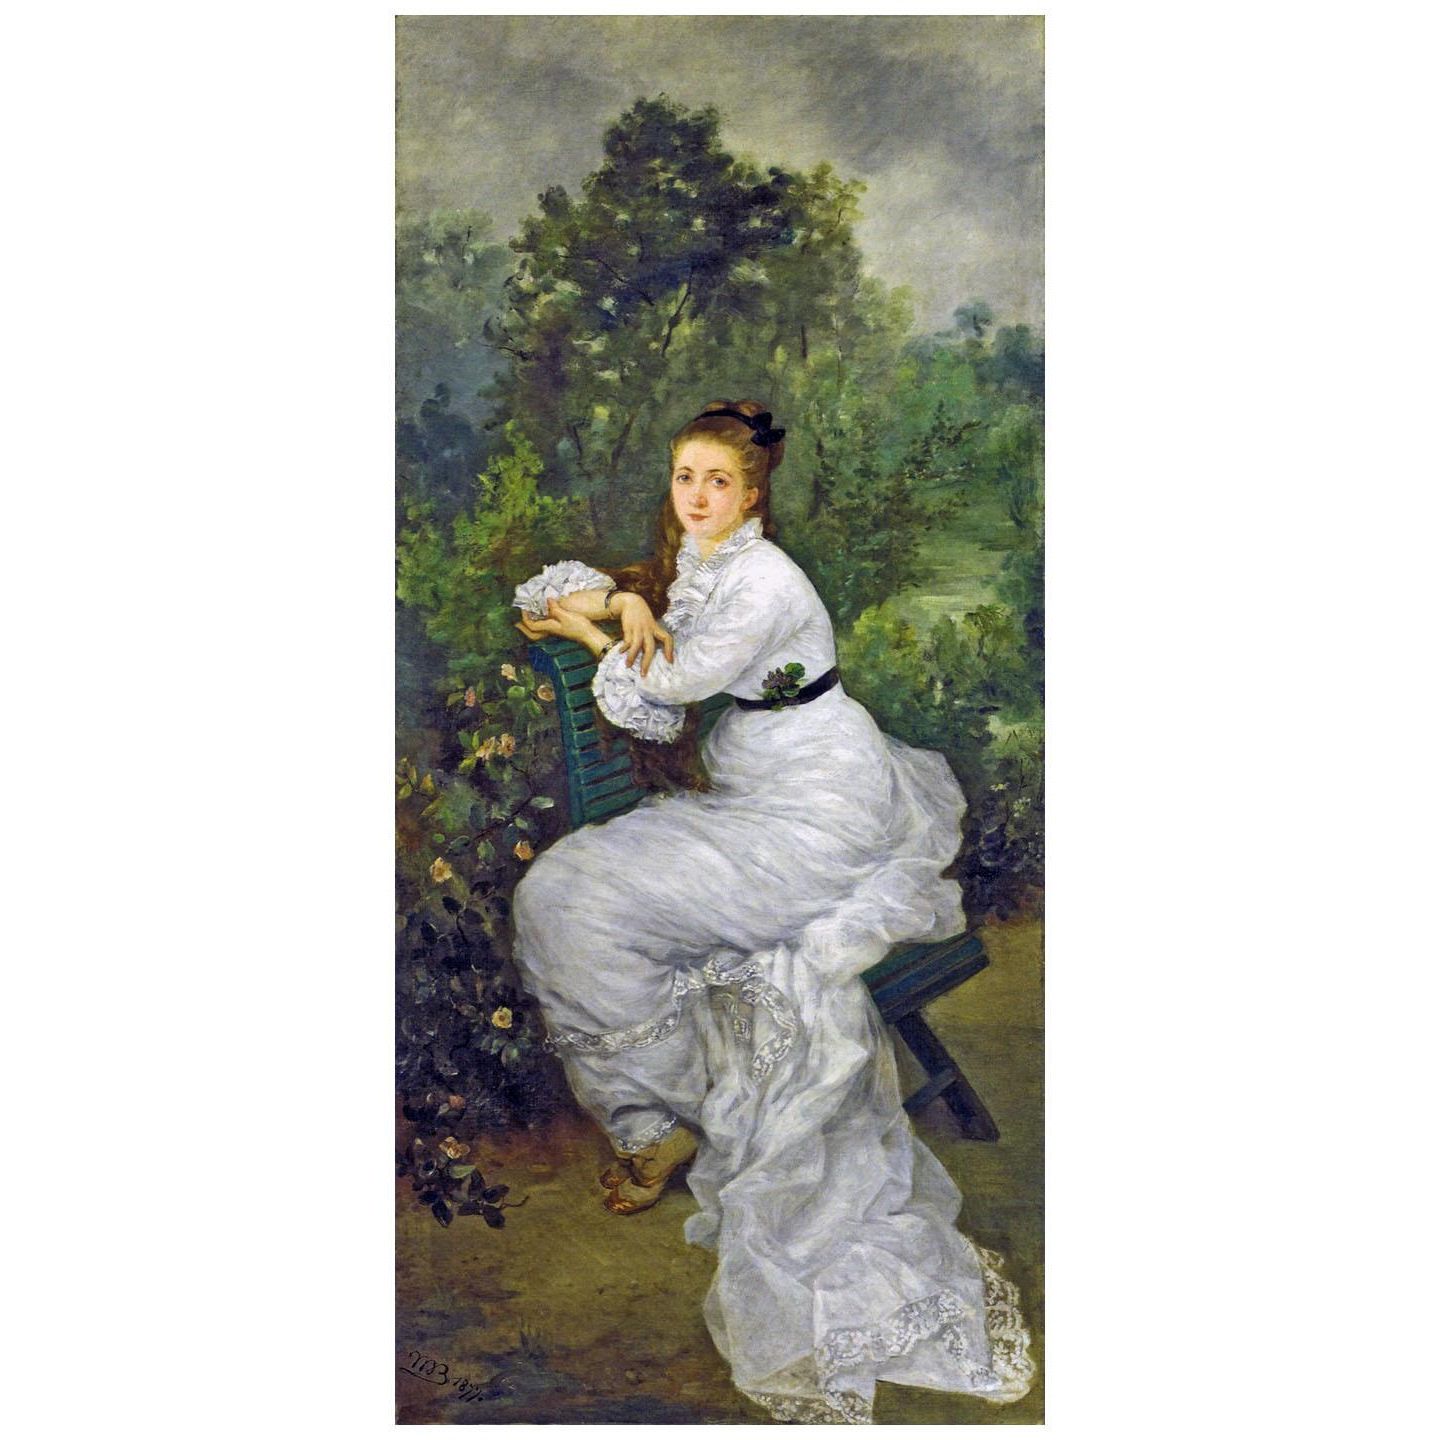 Marie Bracquemond. Femme au jardin. 1877. Private collection